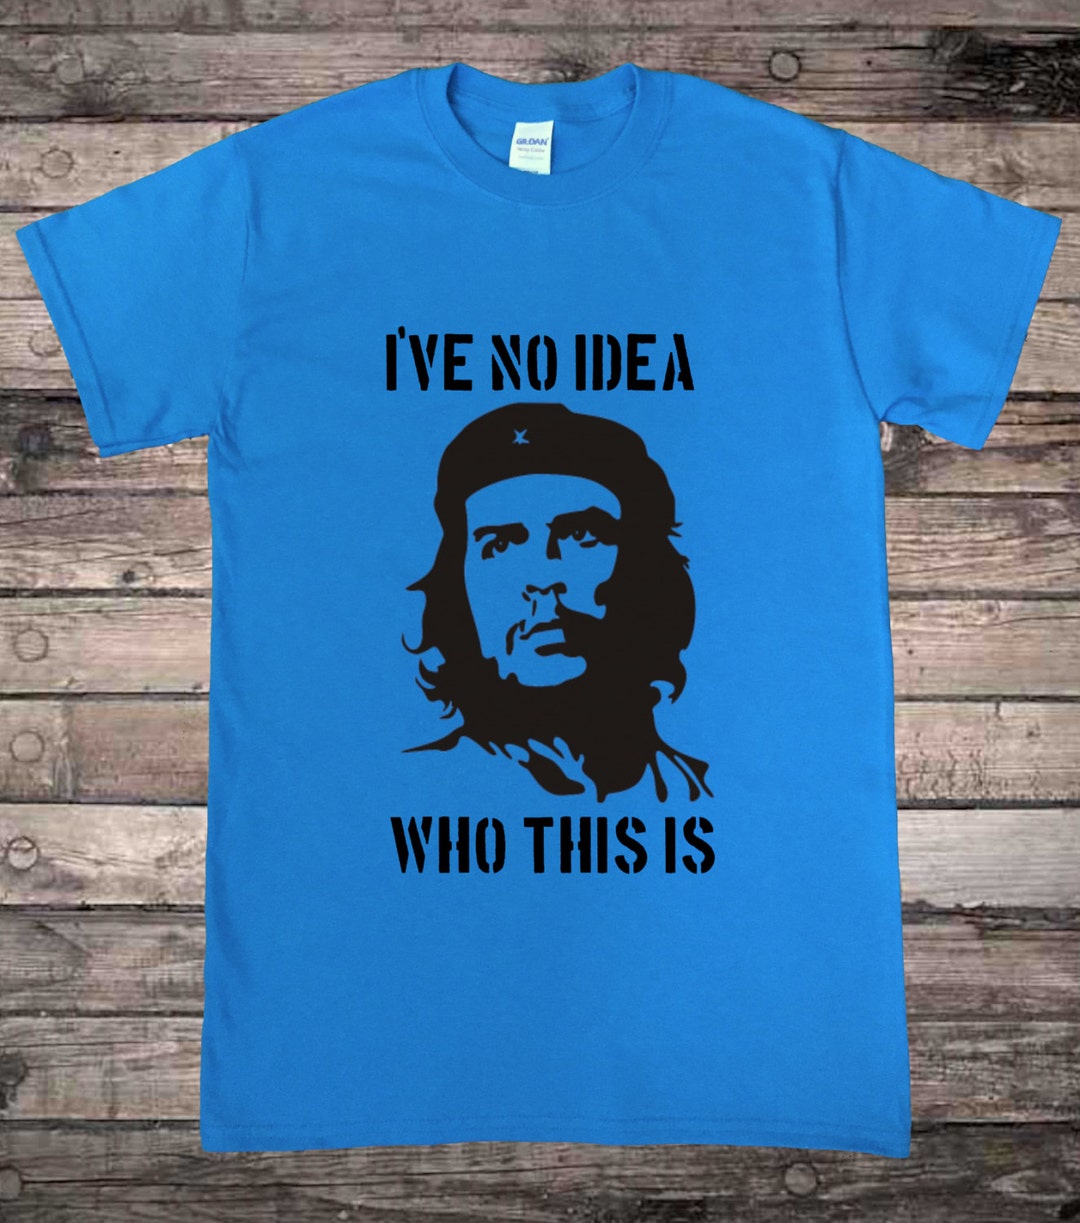 Che Guevara Meme -  Canada